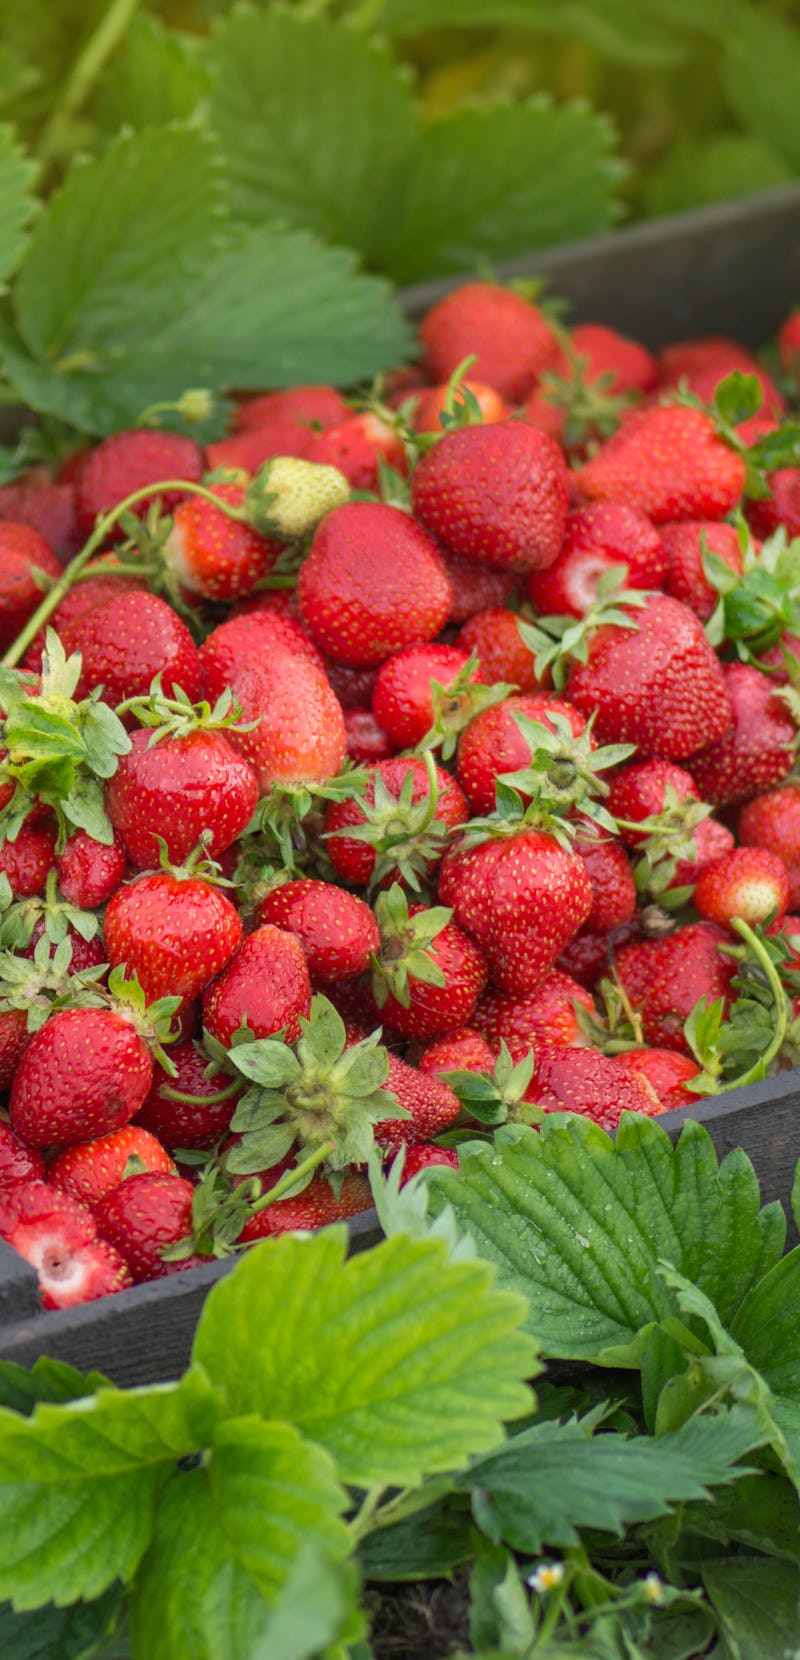 Harvesting strawberries. Strawberries near strawberry plants